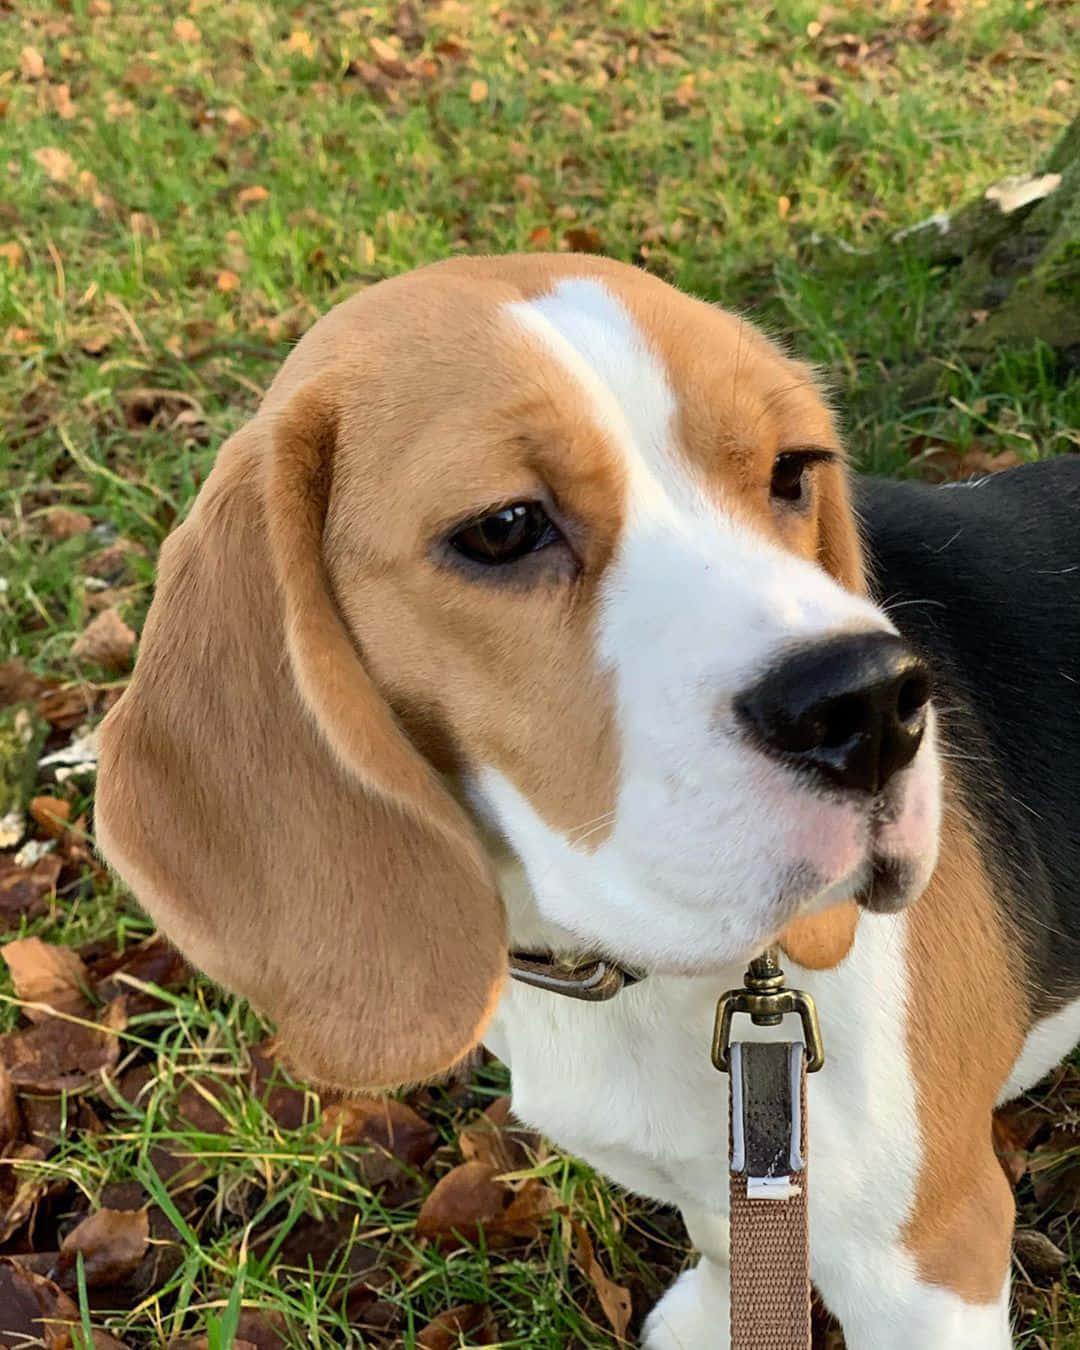 A happy Beagle pup enjoying the outdoors